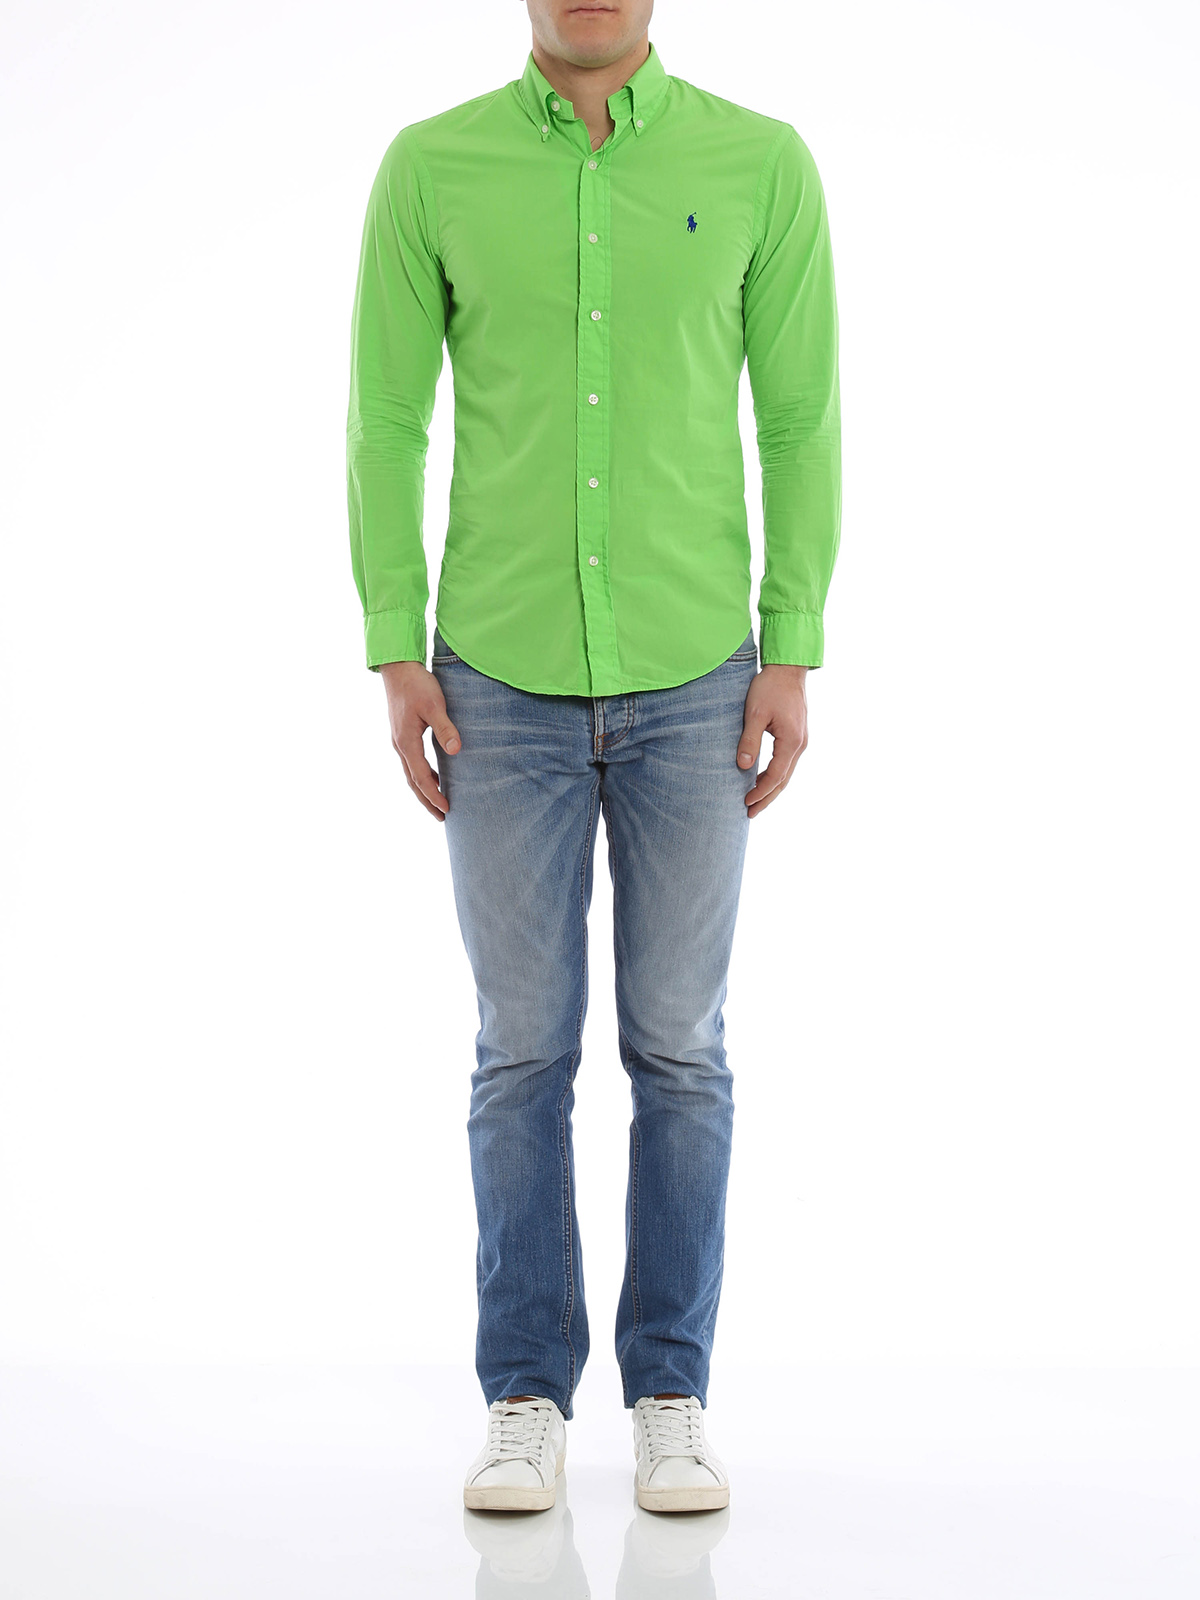 danés Injusticia Punto Camisas Ralph Lauren - Camisa Verde Claro Para Hombre - A04W4C02B5C01A34TW